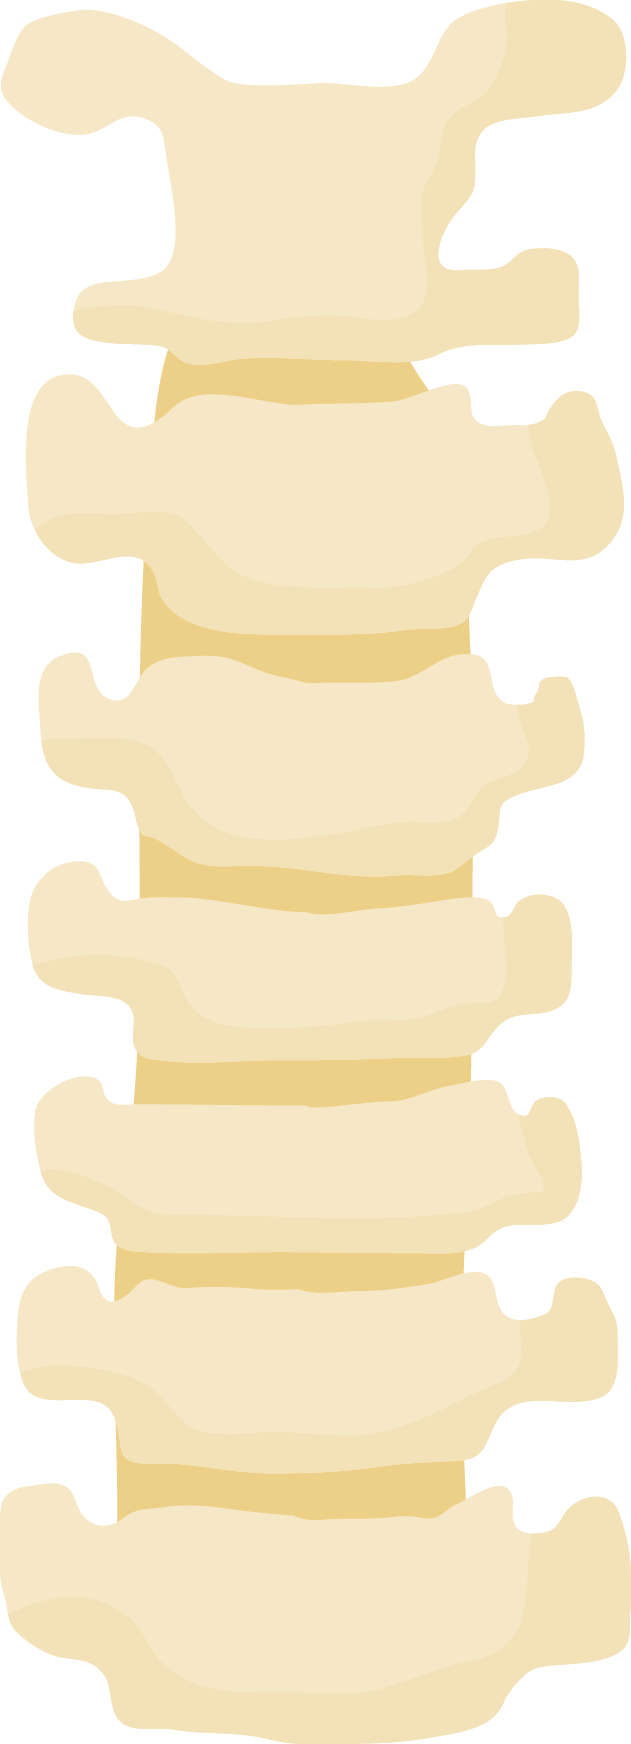 Spine vertebrae